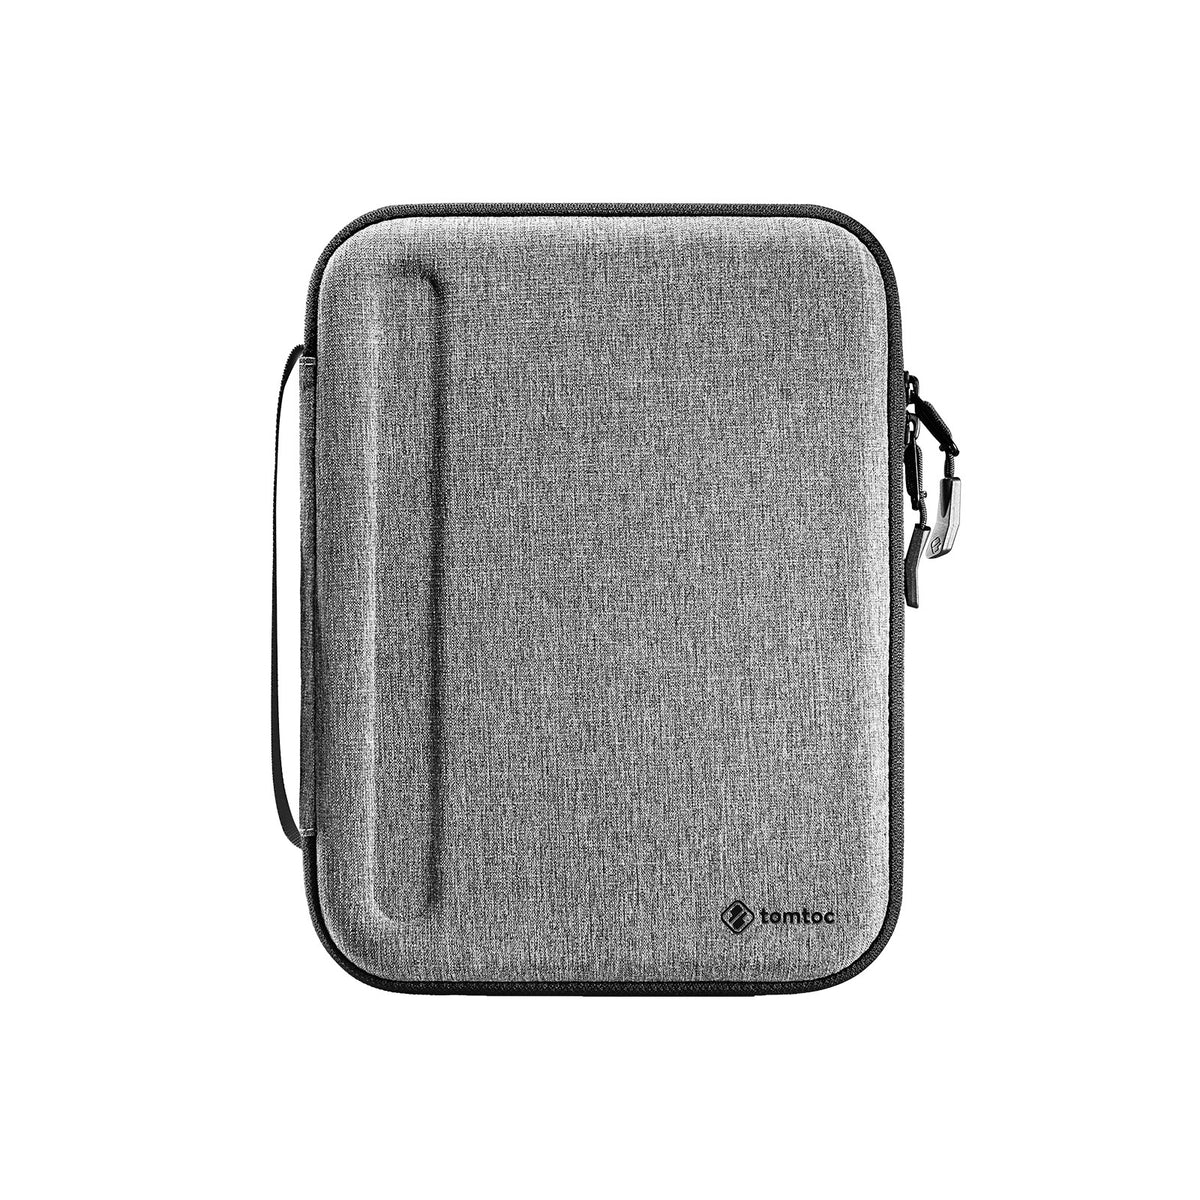 Men's Laptop Briefcase Computer Bag Business Document Organizer Ipad Tote  Handbag Messenger Purse Strap Pouch Accessories Items - Briefcases -  AliExpress